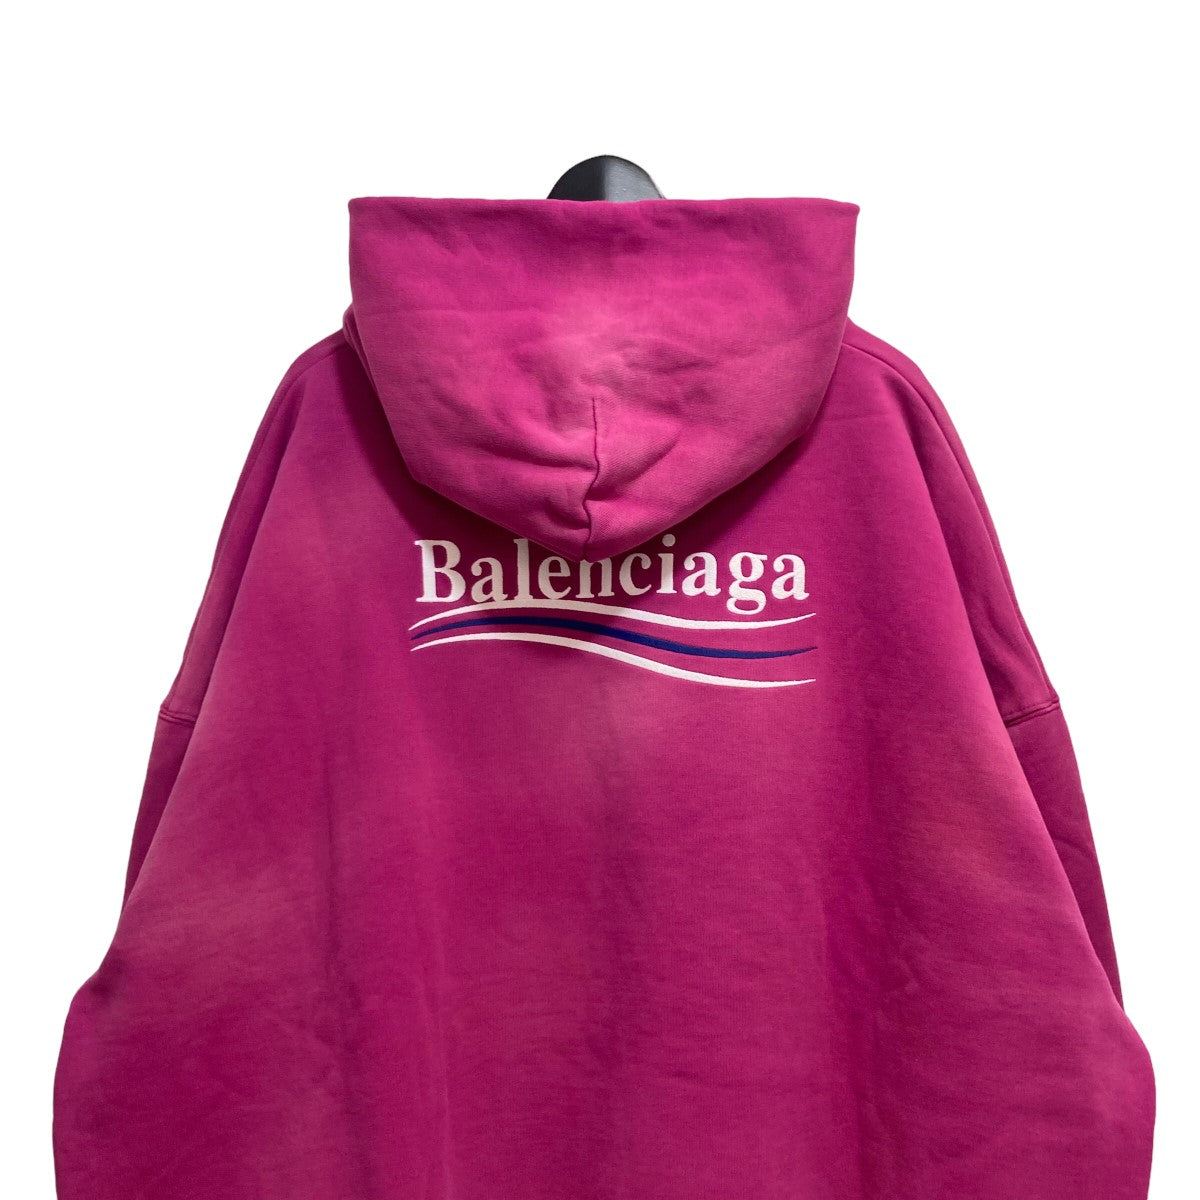 BALENCIAGA(バレンシアガ) ユーズド加工キャンペーンロゴ刺繍プルオーバーパーカー620947 TKVI9